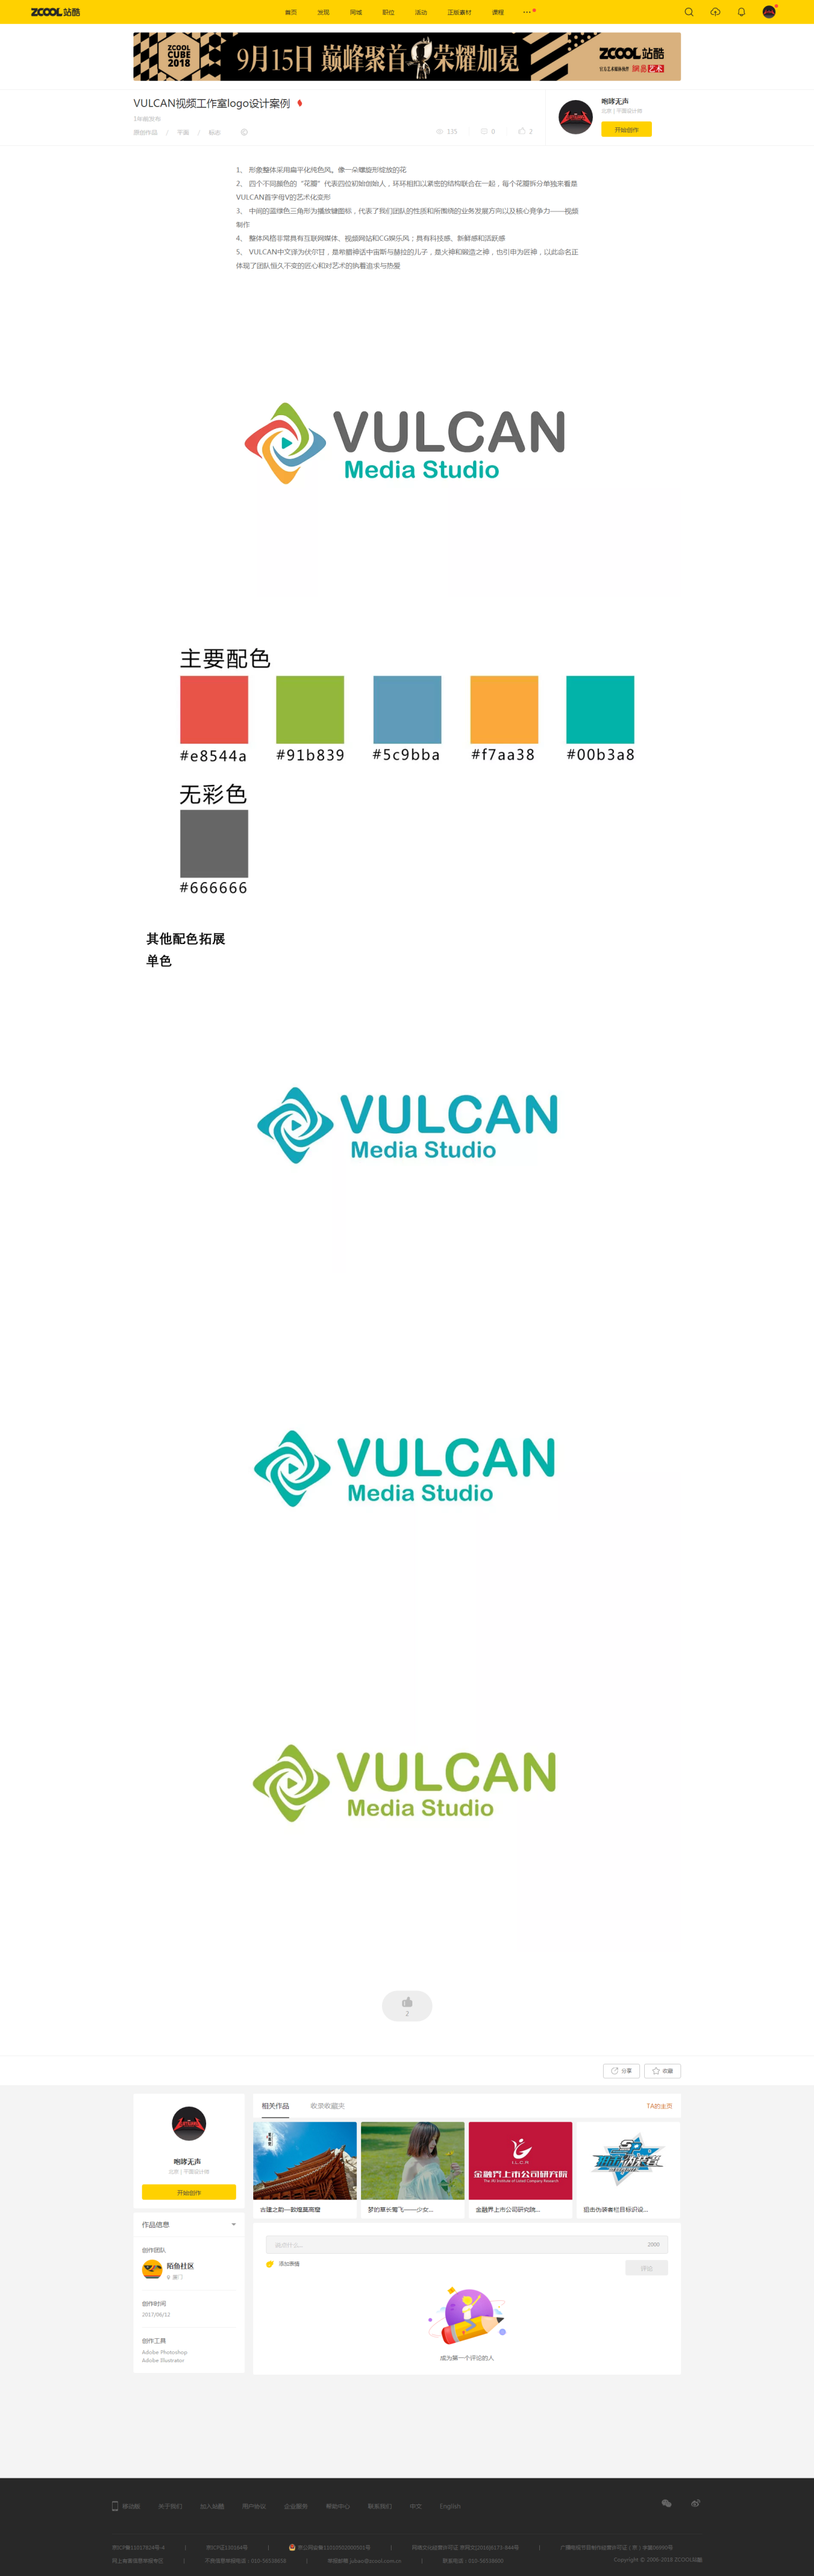 VULCAN视频工作室logo设计案例图0